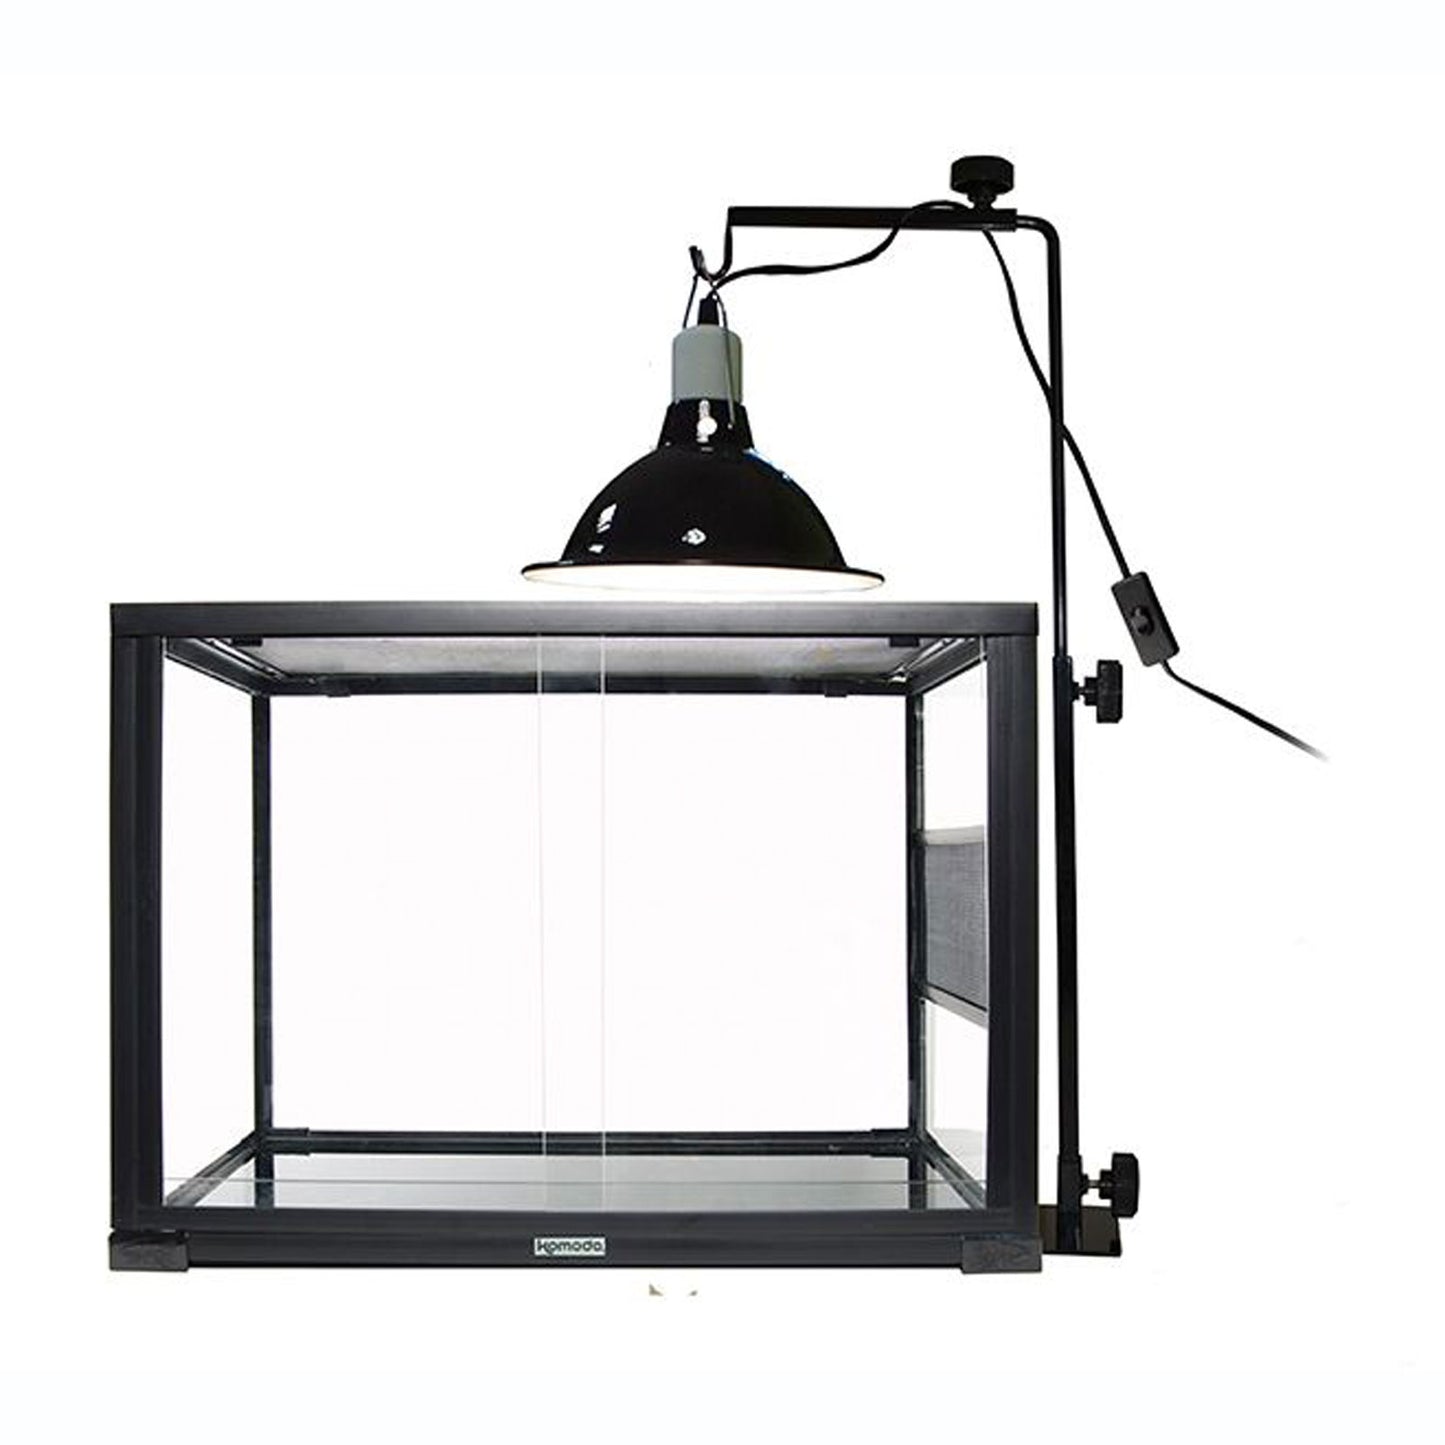 Komodo Light Stand - Adjustable Reptile Tortoise Lamp Dome Fixture